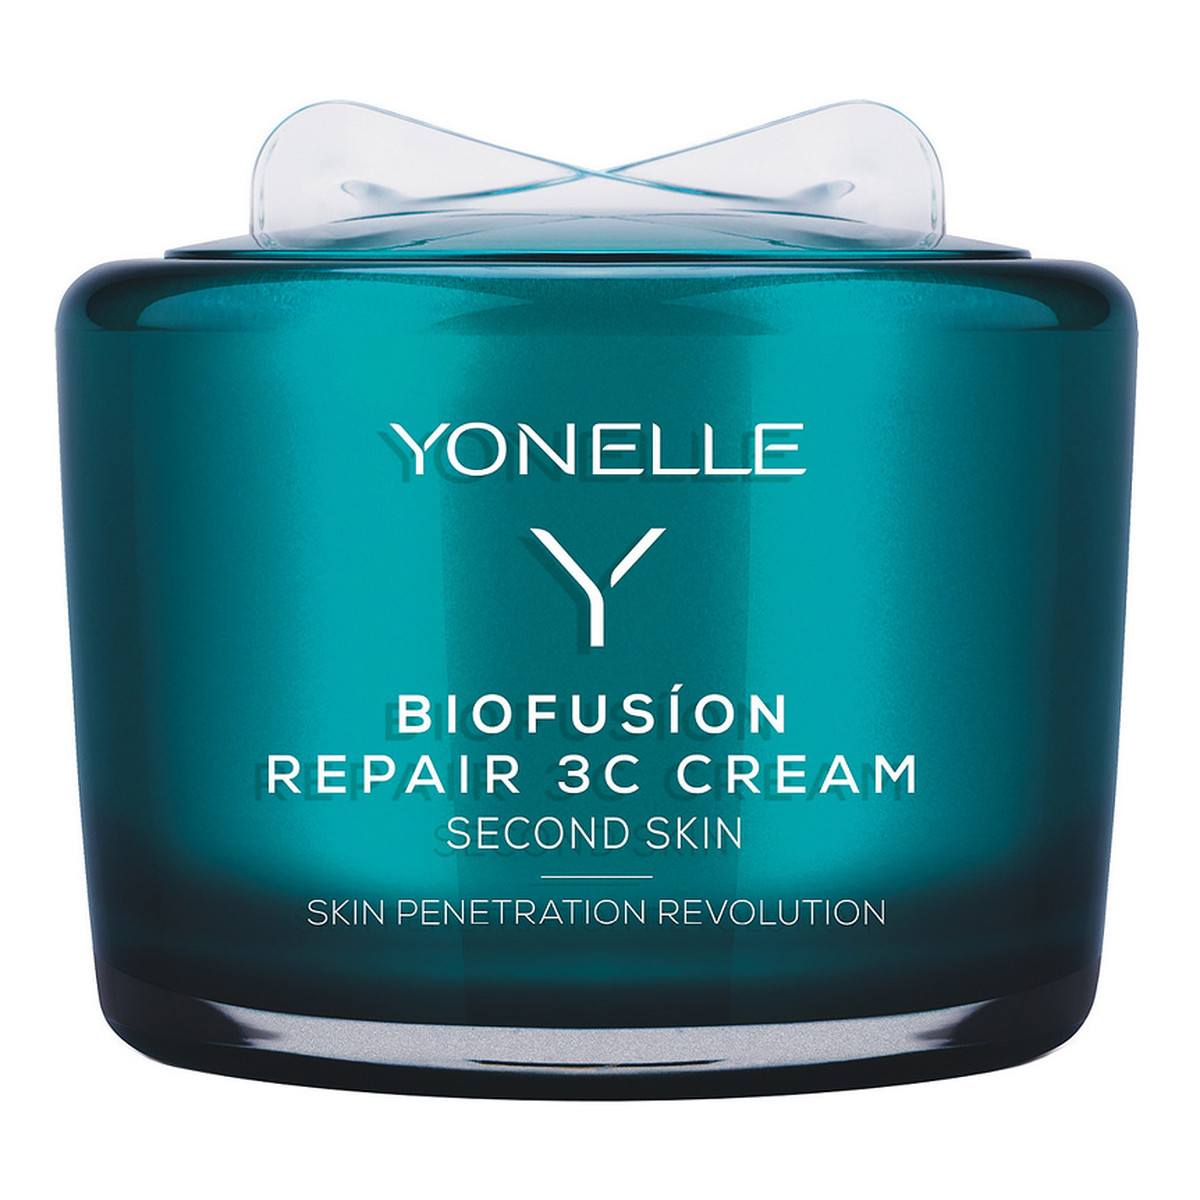 Yonelle Biofusion Repair 3C Cream Naprawczy krem do twarzy 55ml